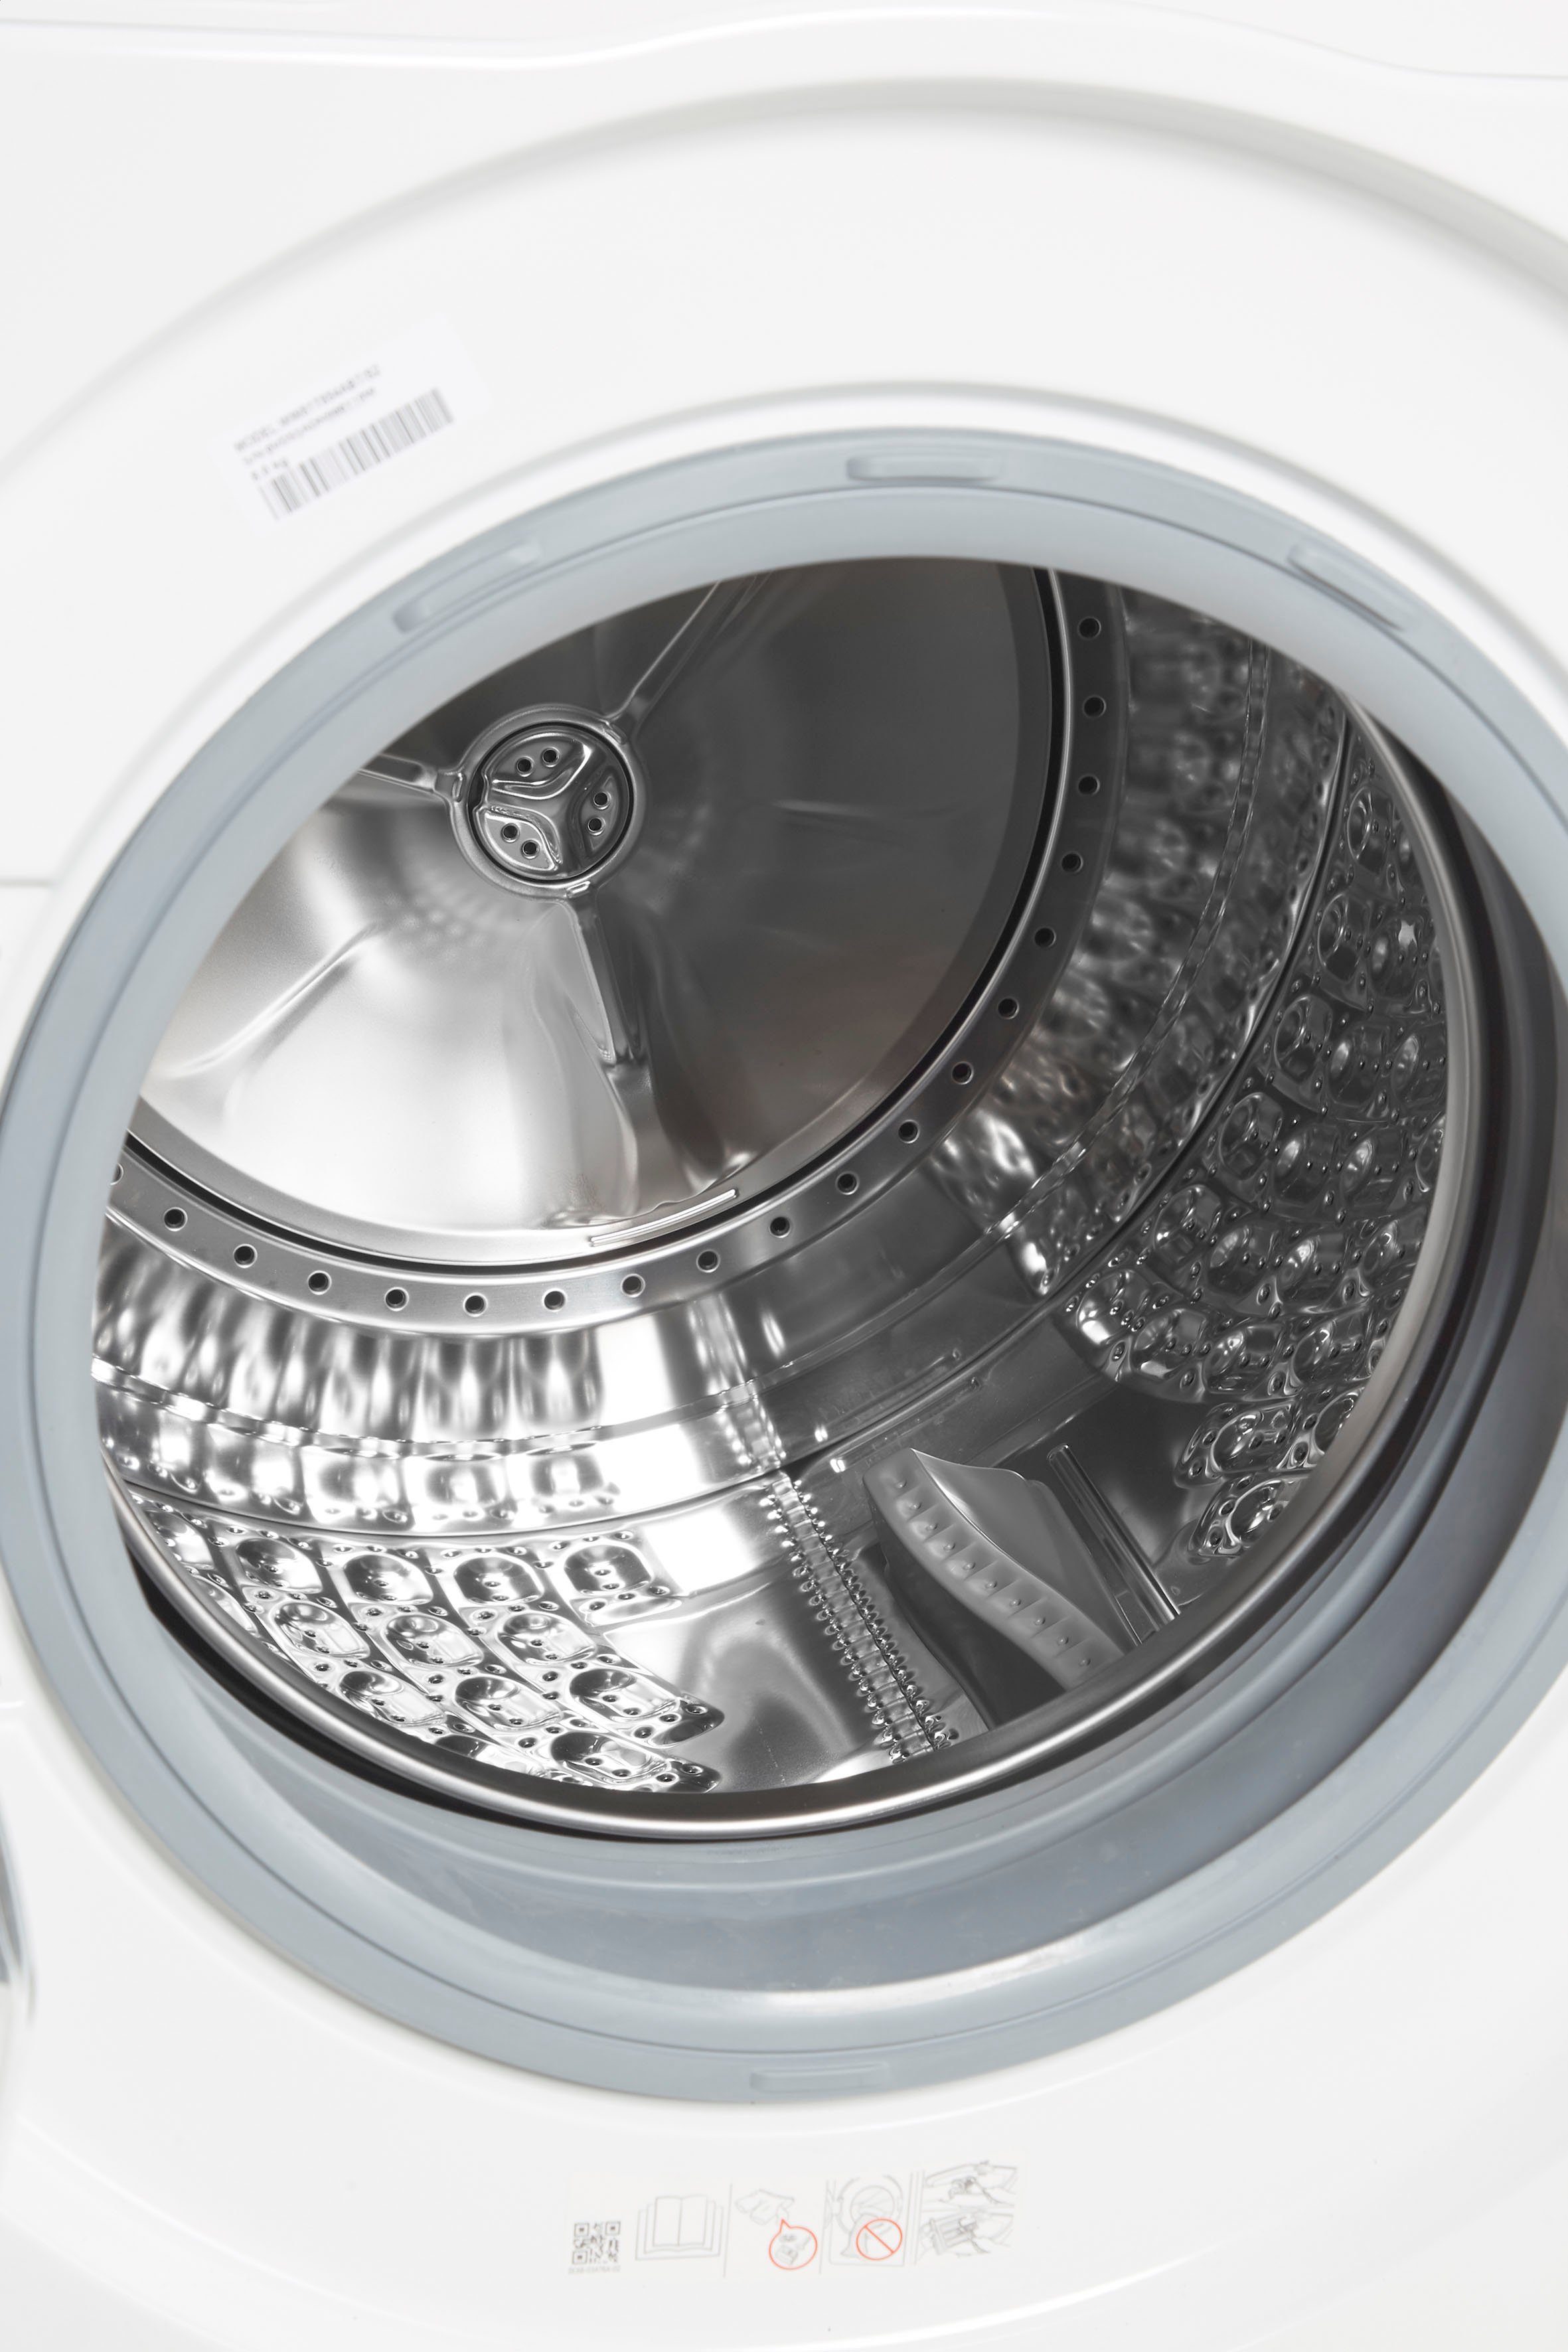 8 Samsung kg, 1400 U/min, QuickDrive™ Waschmaschine WW81T854ABT, WW8500T